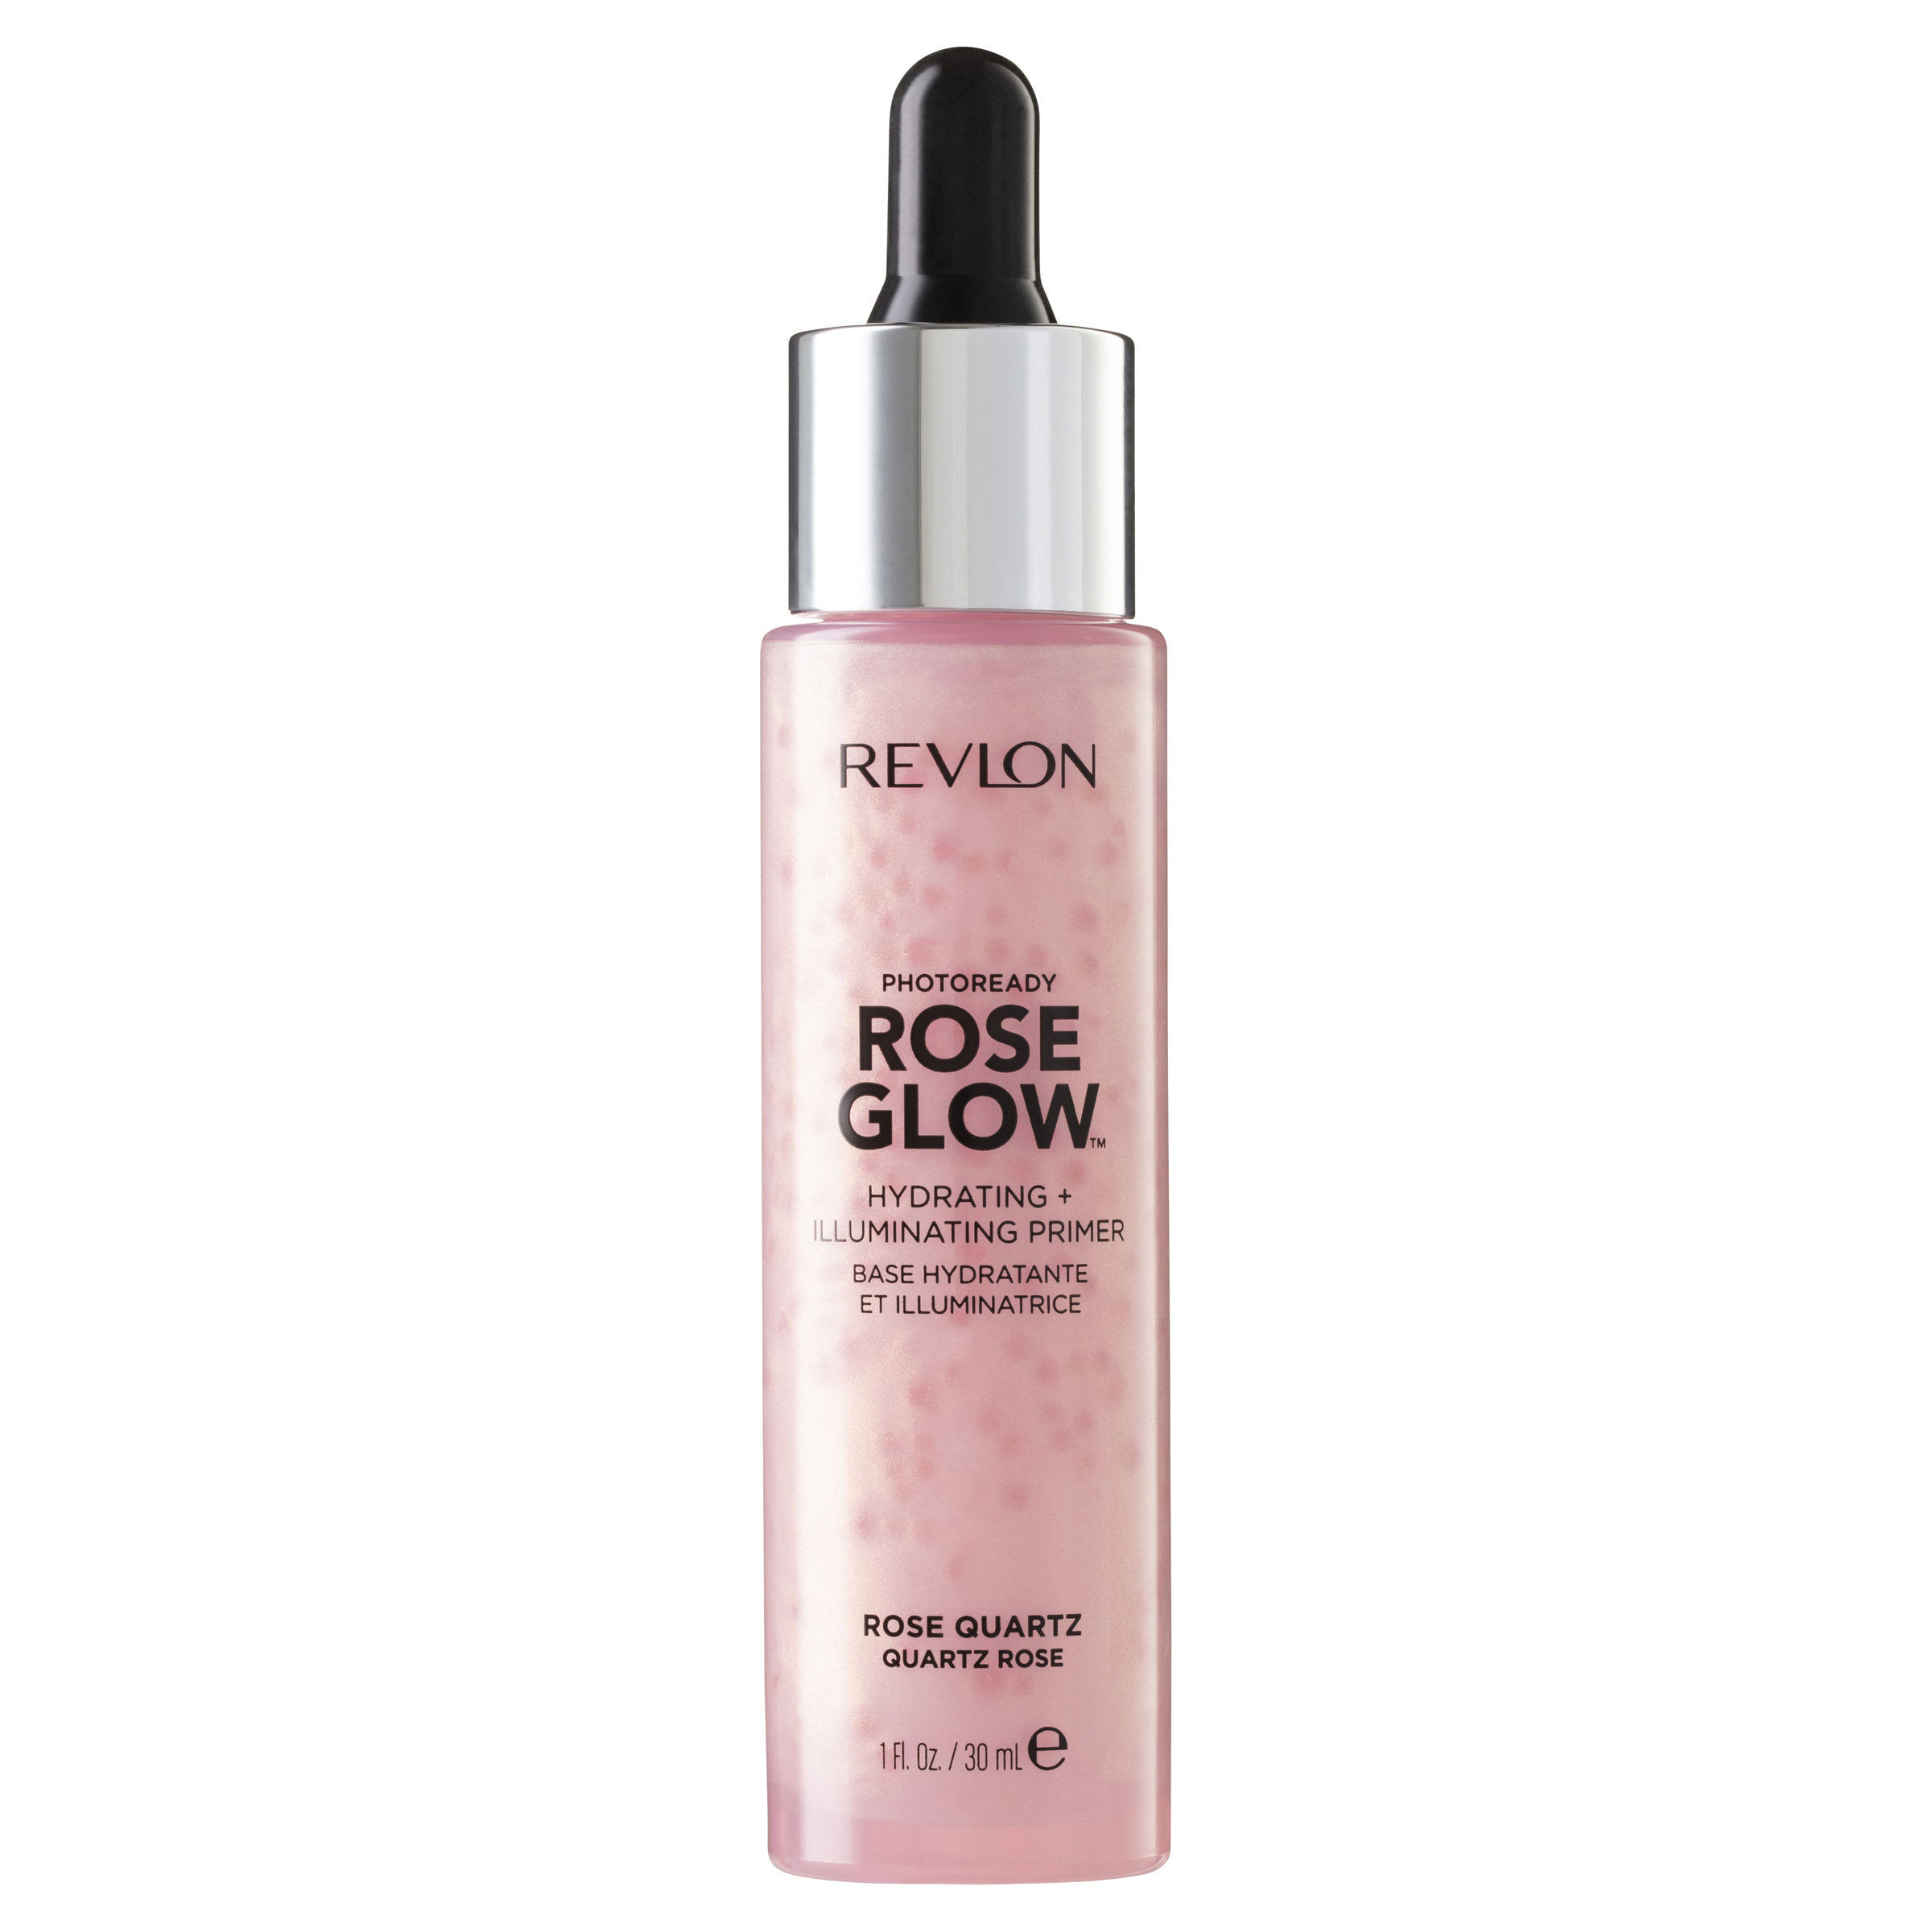 Revlon Photoready Rose Glow Face Makeup Primer - Rose Quartz, 1.0oz